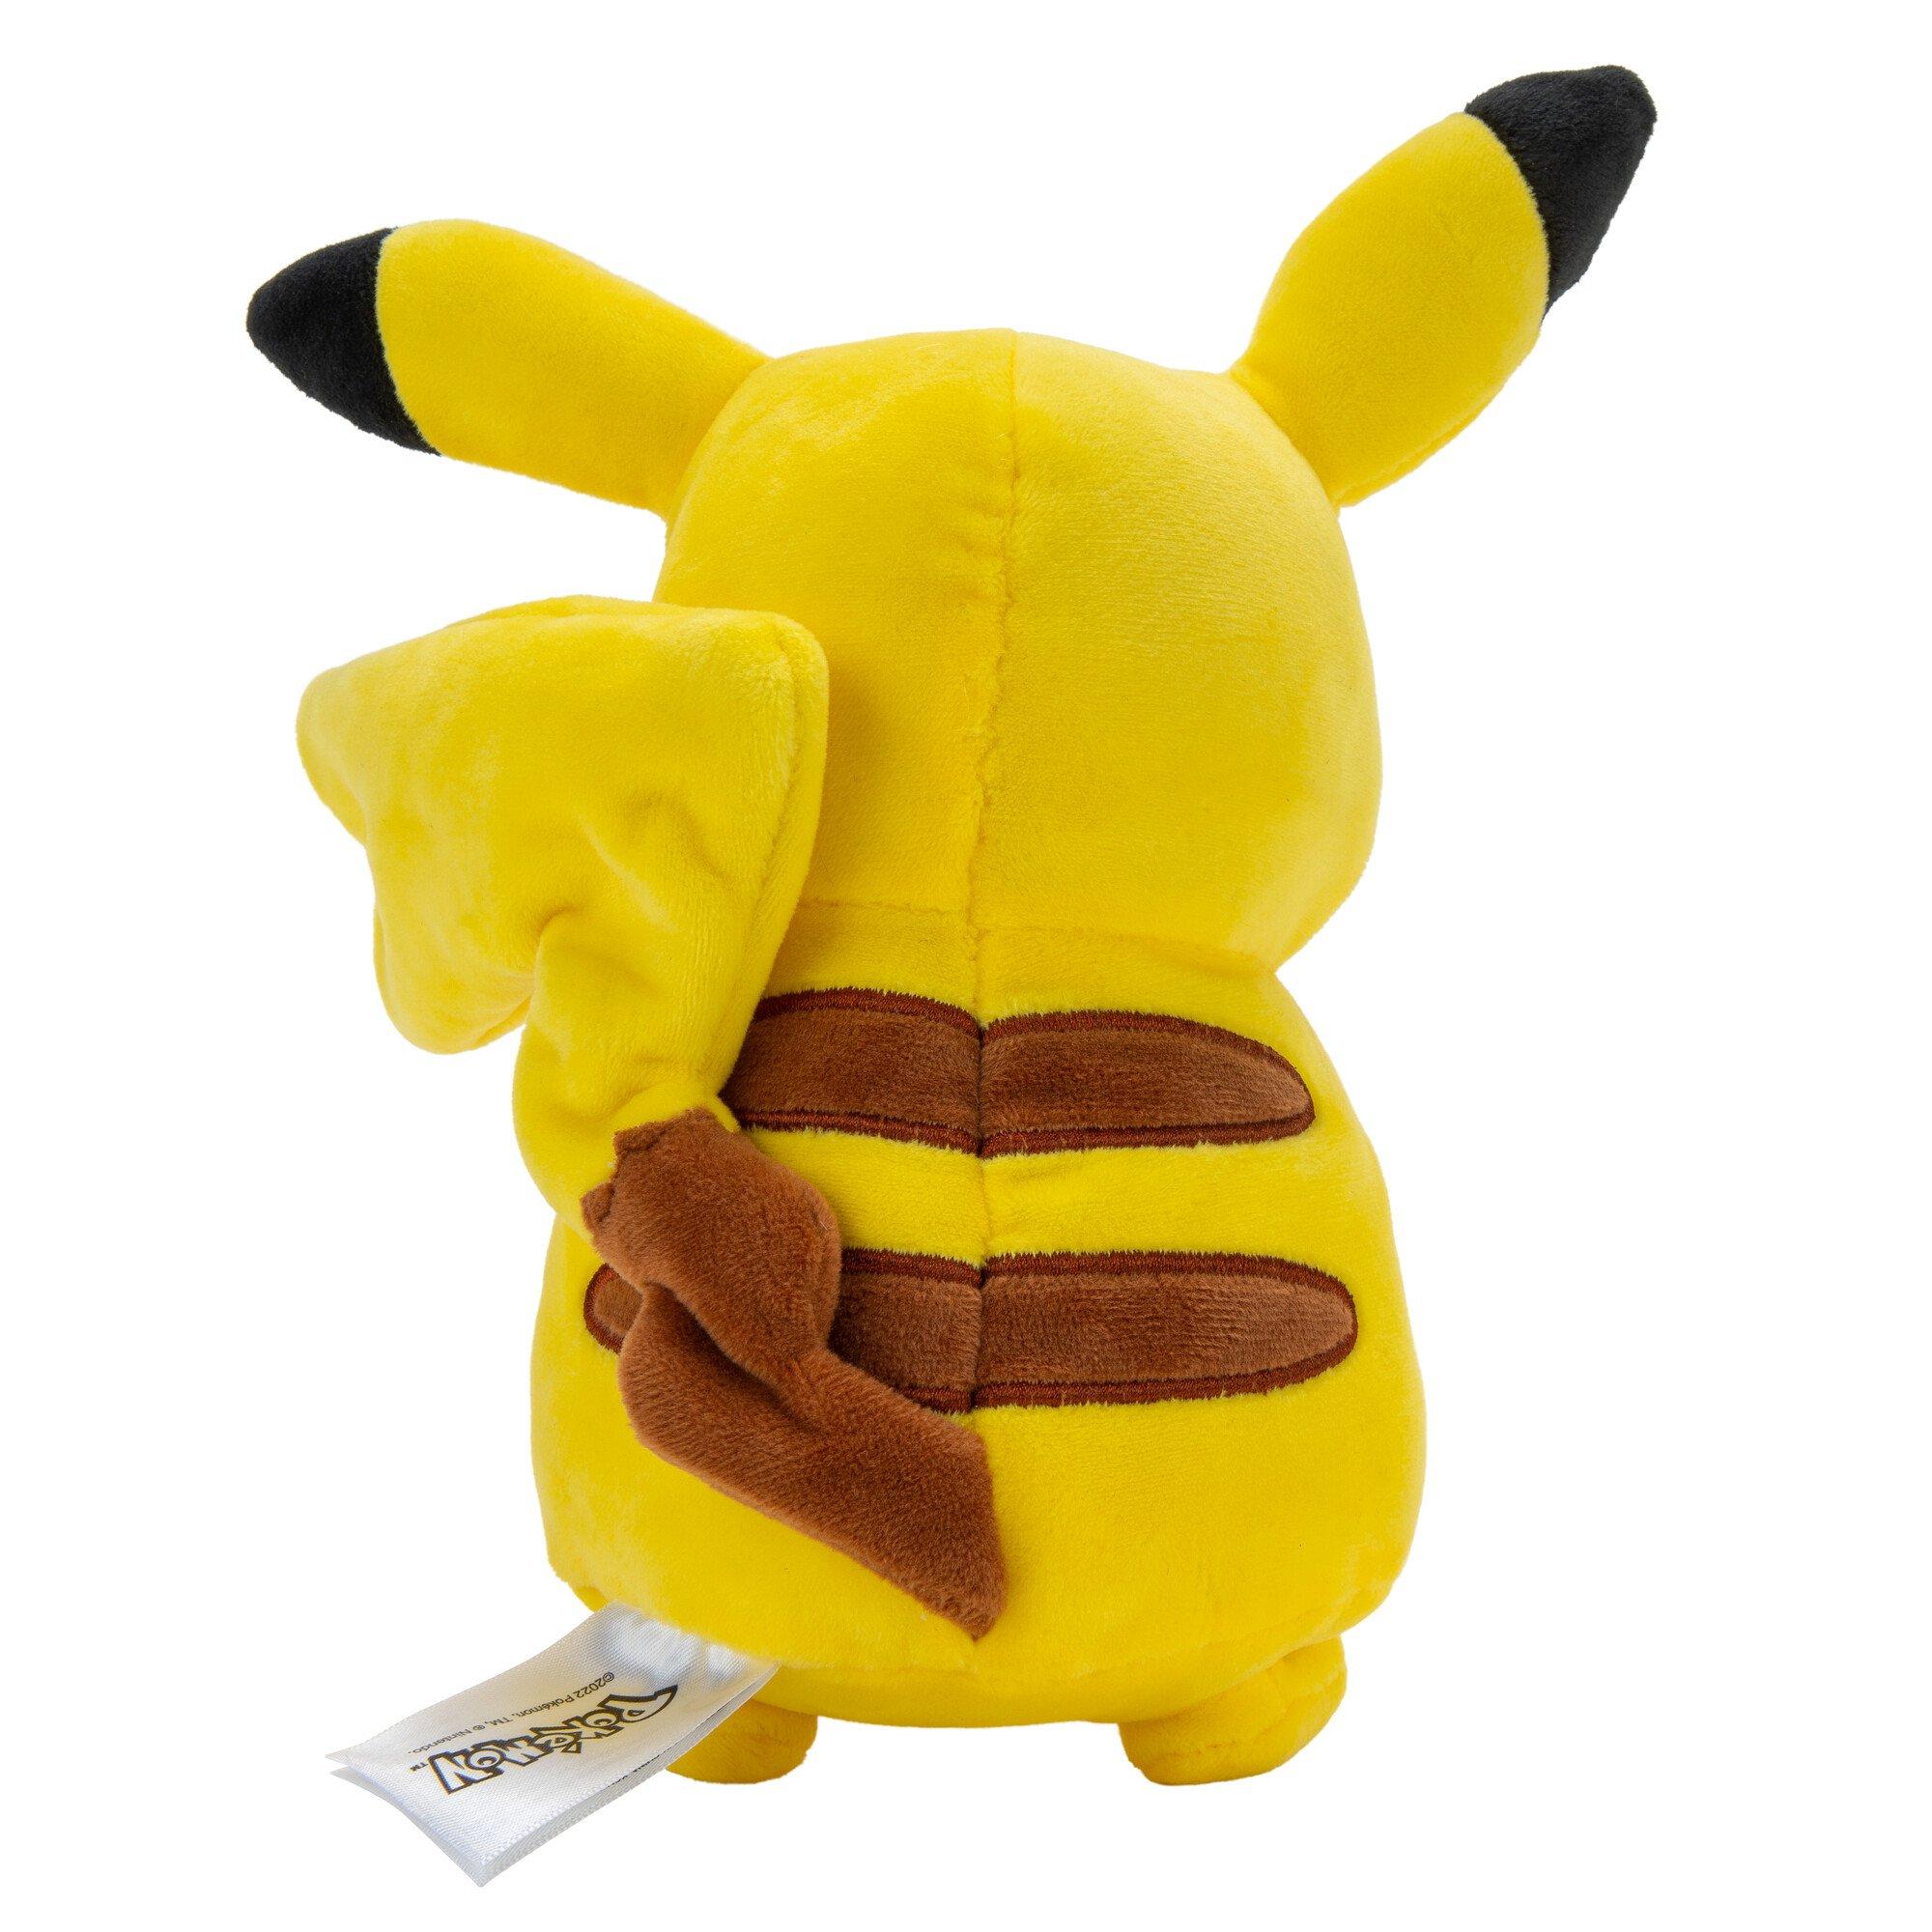 2021 Jazwares Pokemon Shiny Pikachu Select Plush 8